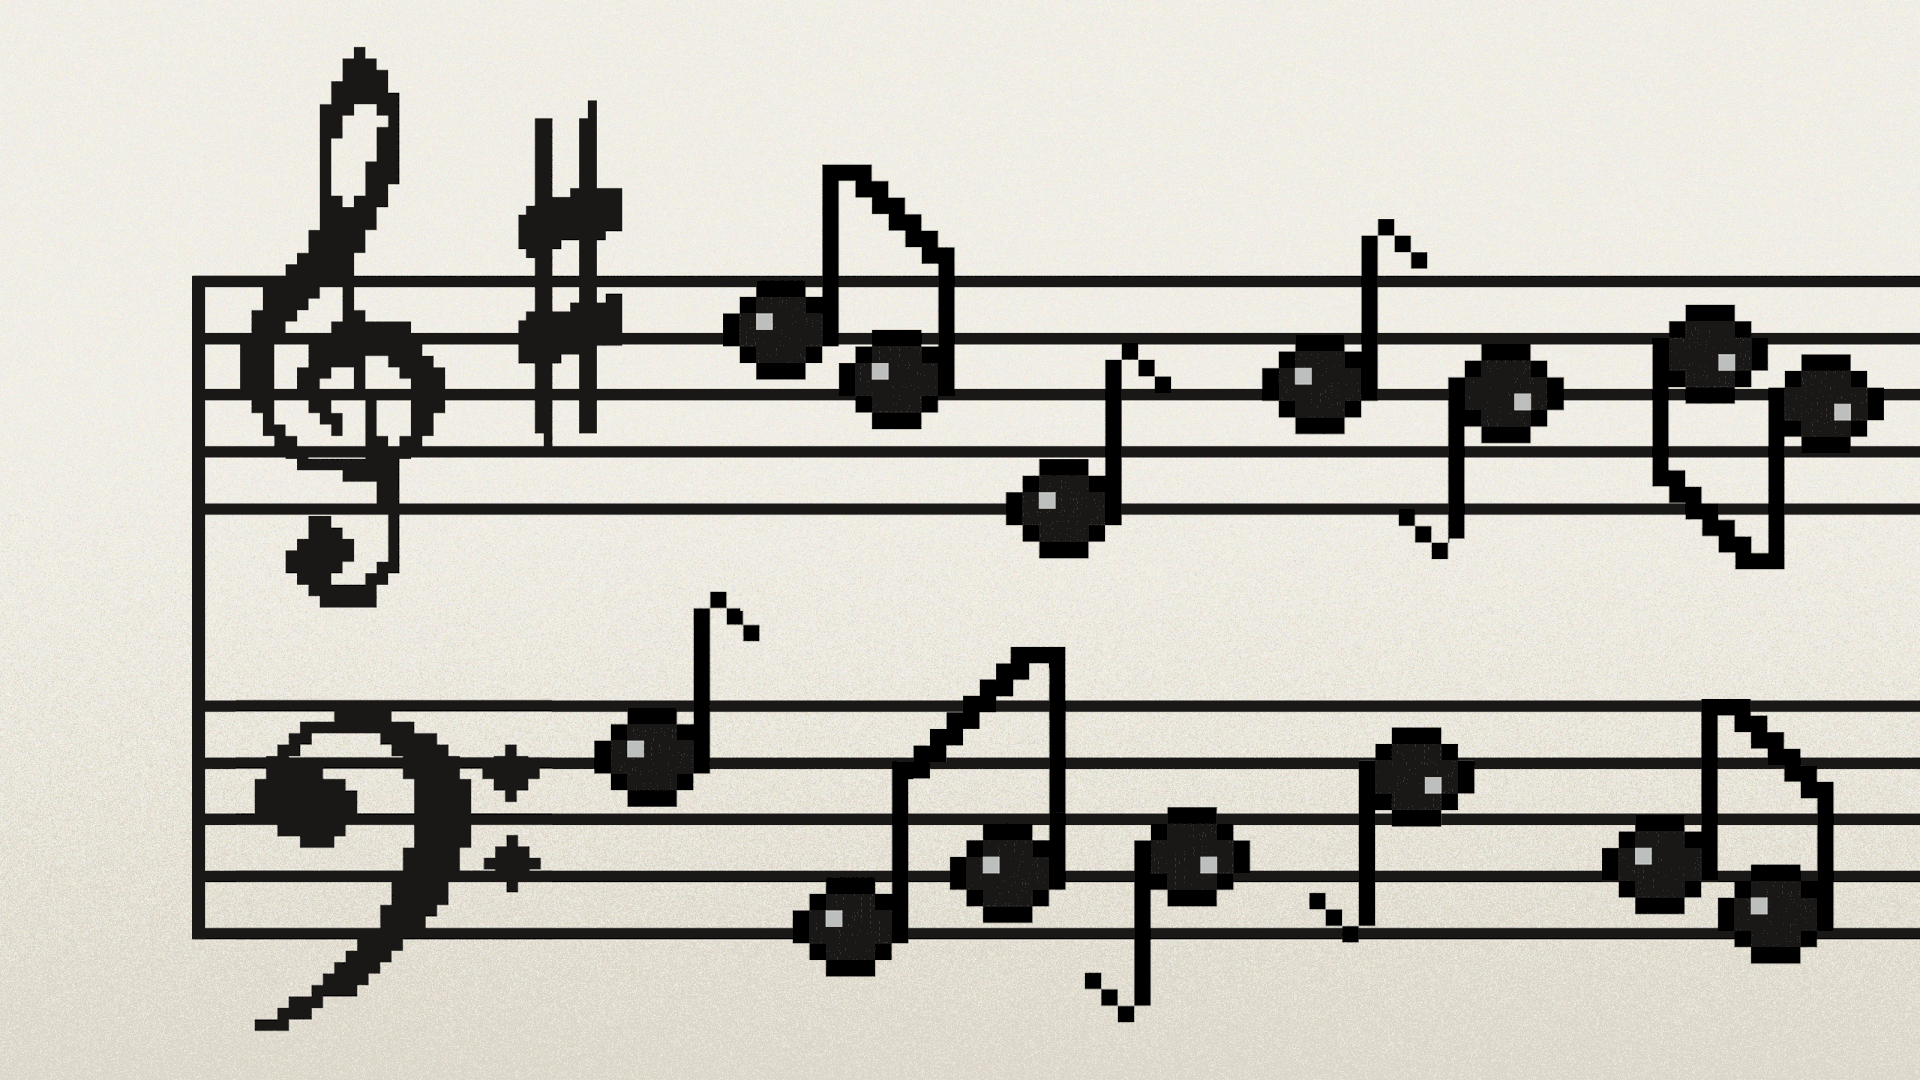 Illustration of 8-bit style sheet music.